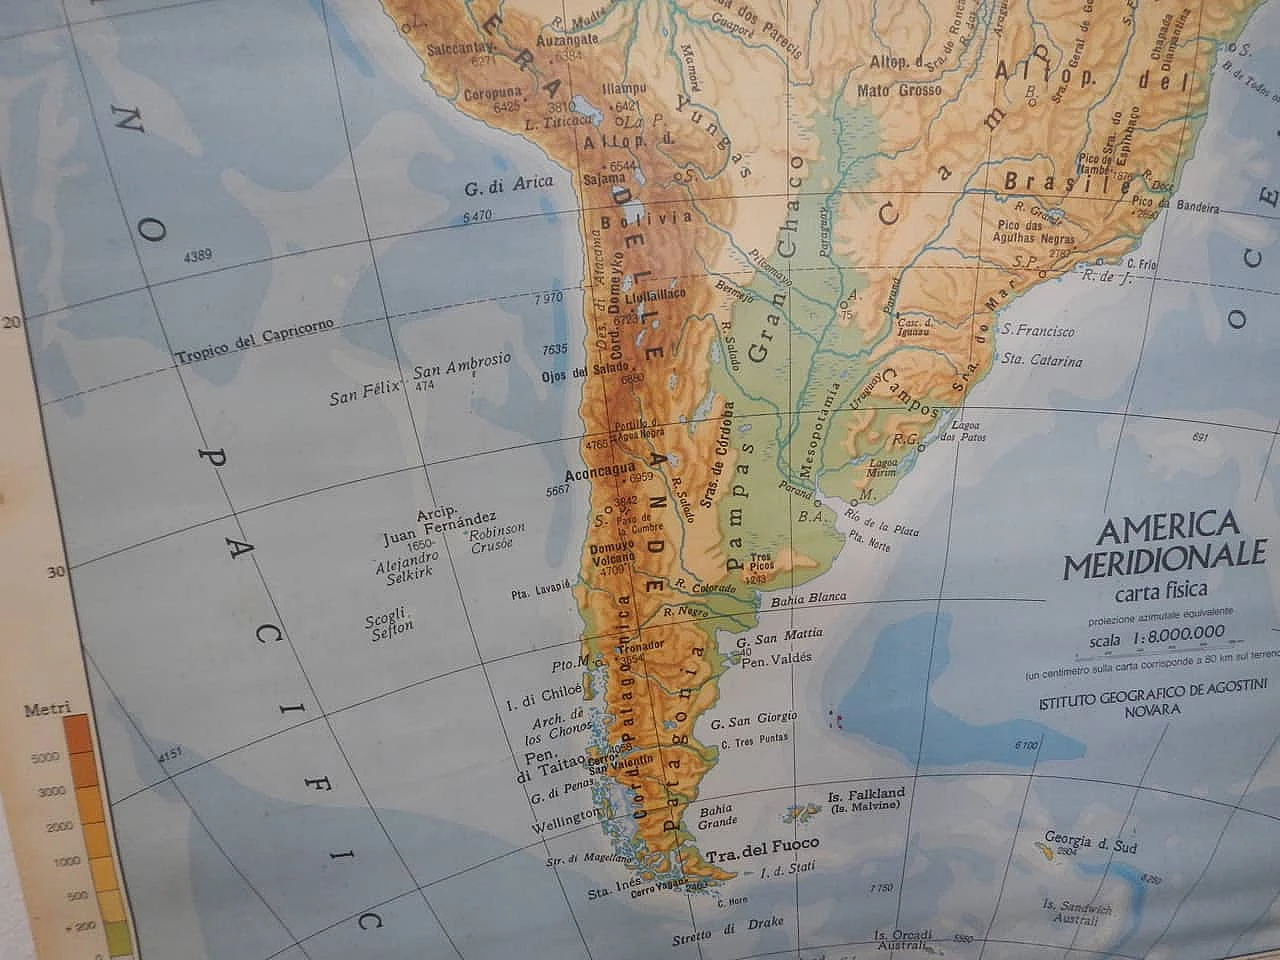 South America map by IGDA Officine Grafiche, 1970s 12